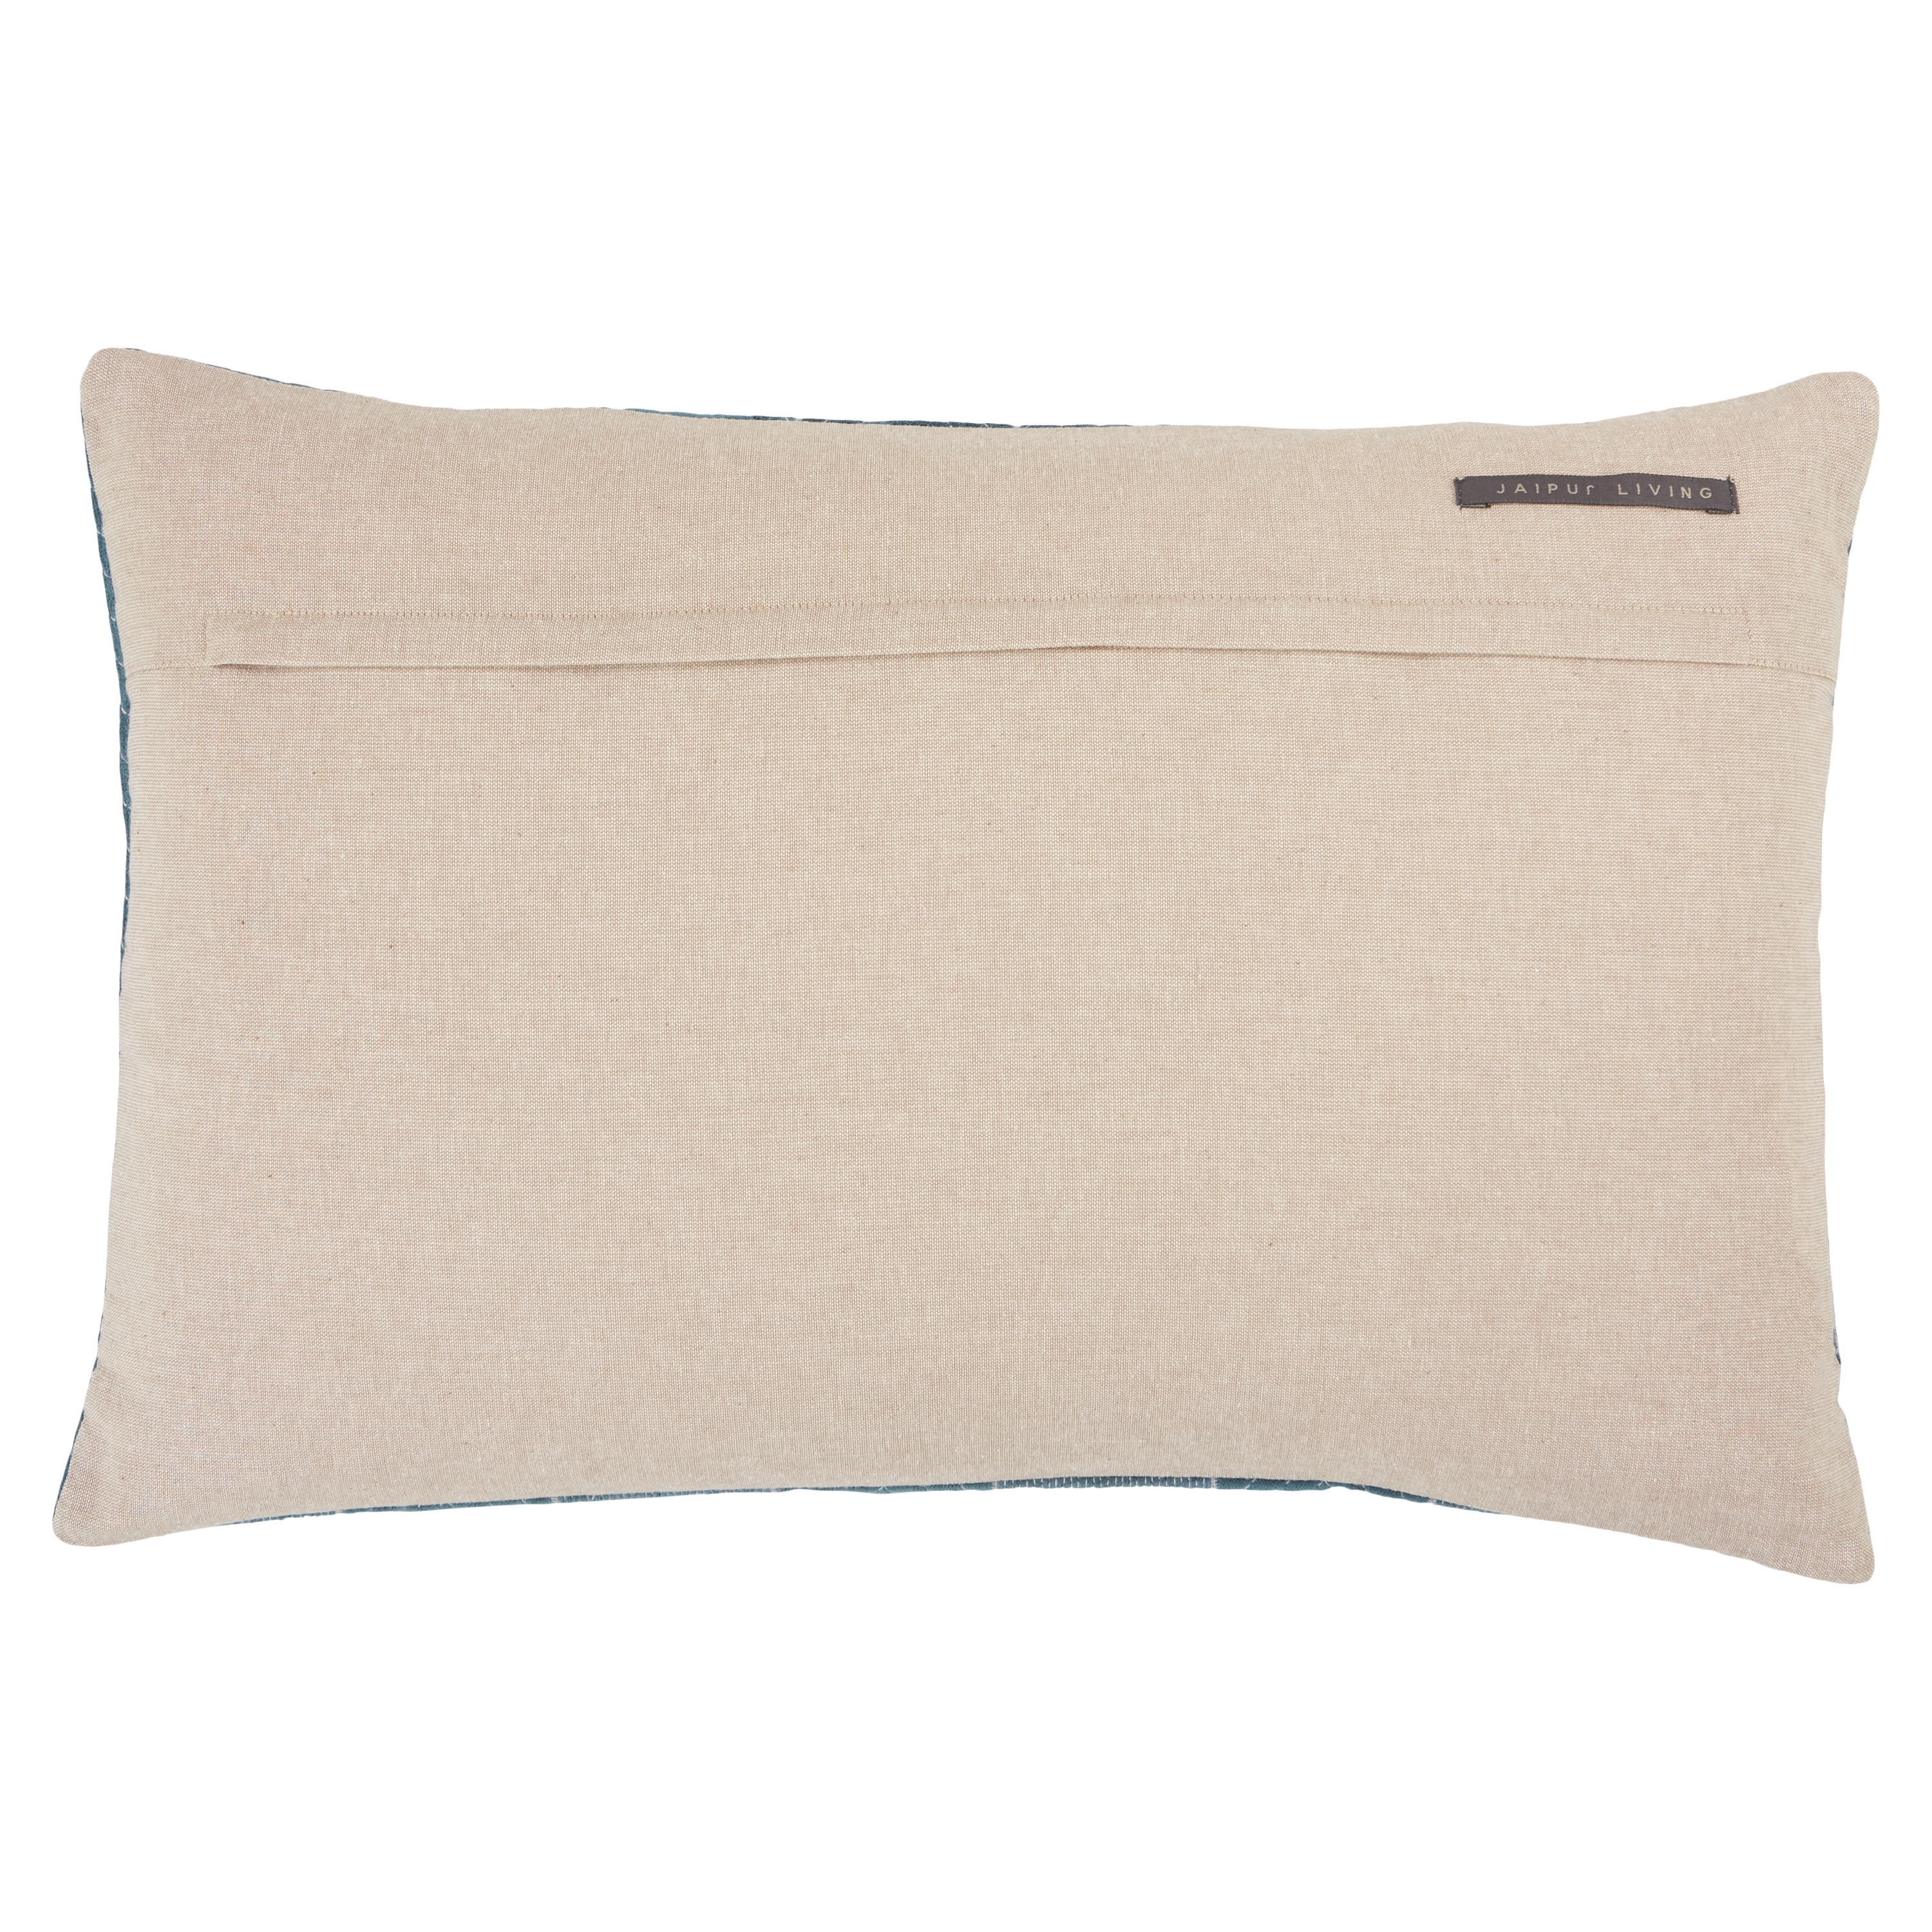 Art Deco Weave Lumbar Pillow, Blue, 24" x 16" - Image 1